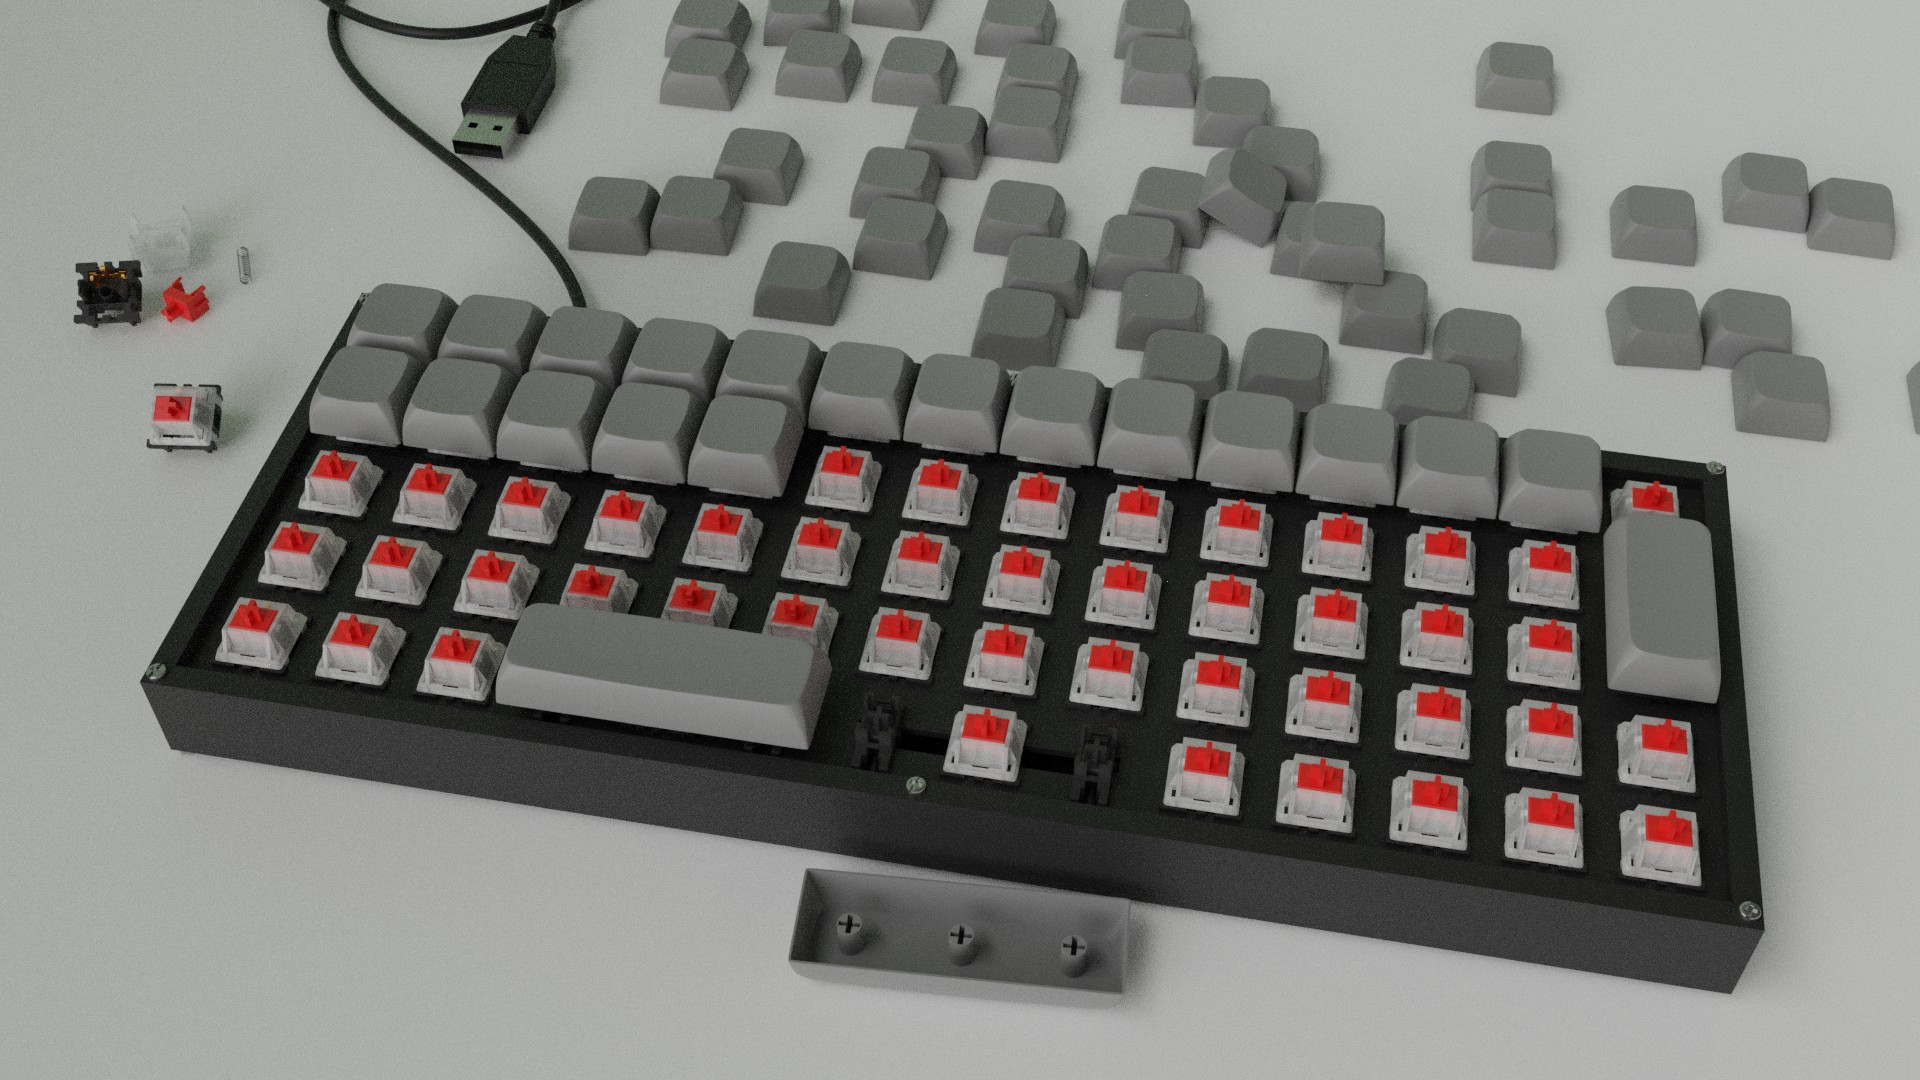 Made a render of the keyboard I hope to make : MechanicalKeyboards